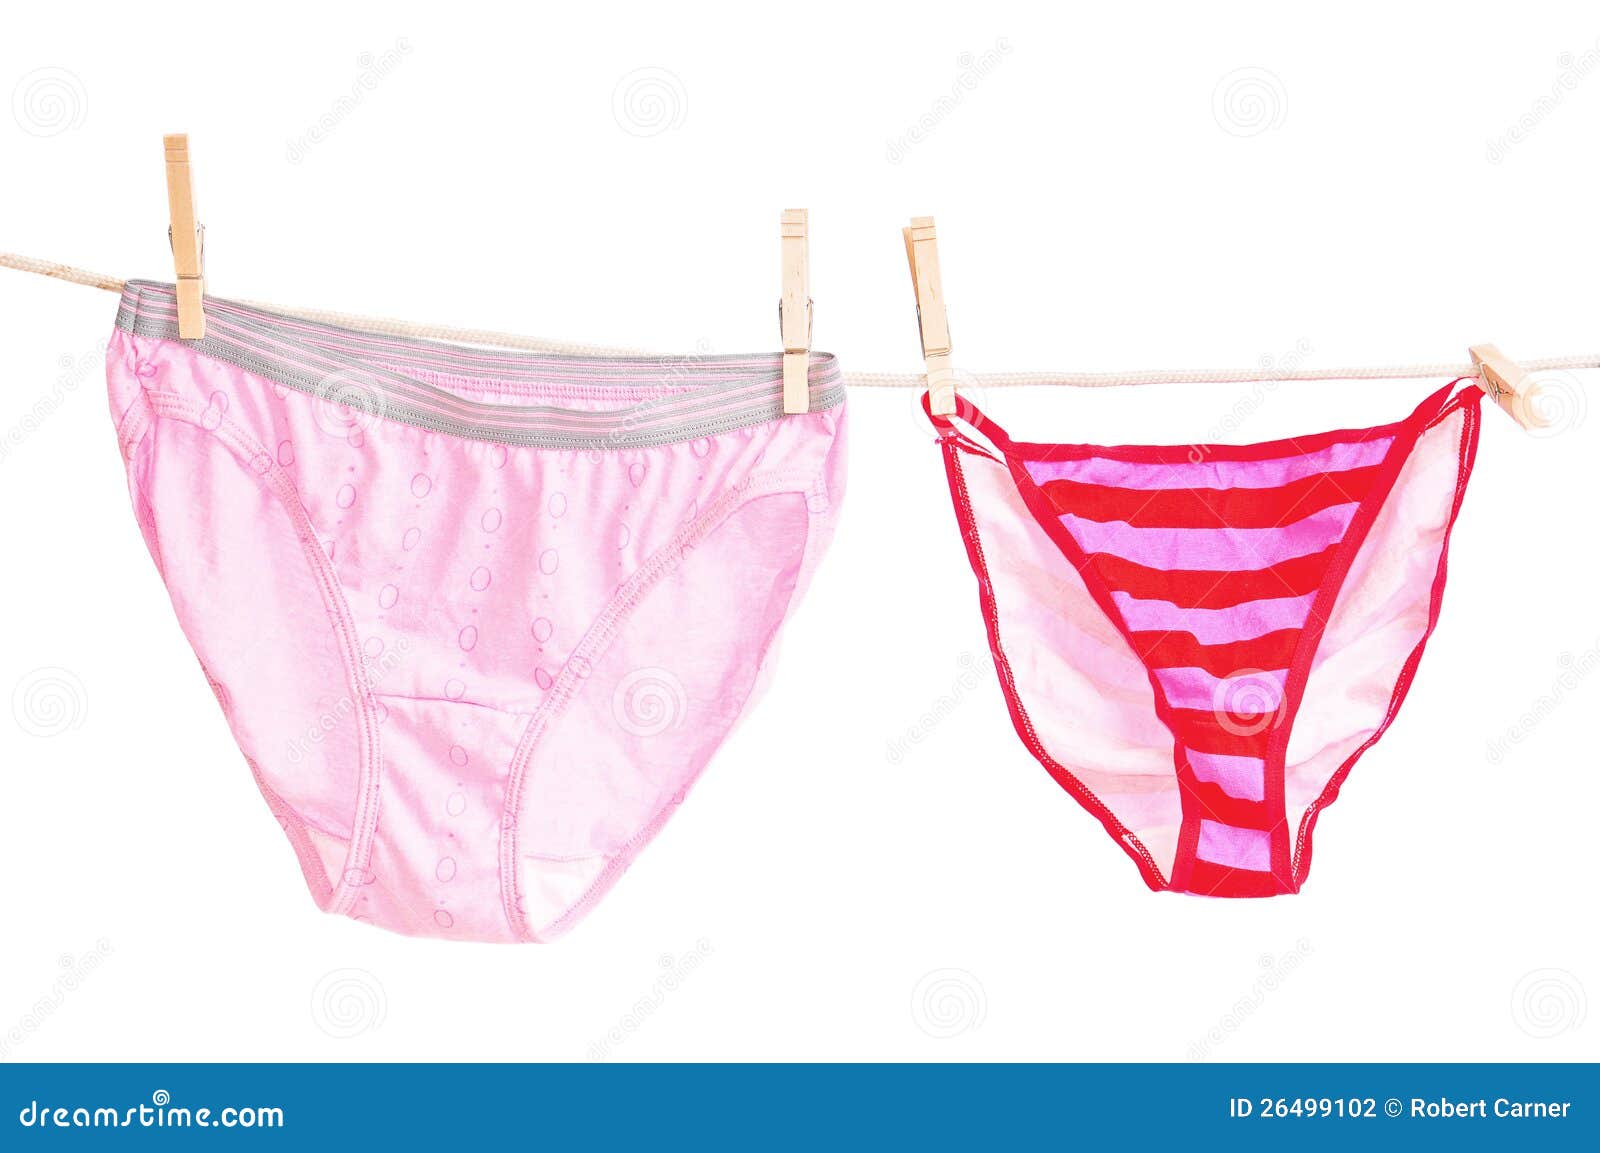 A Free Pair Of Panties Pic